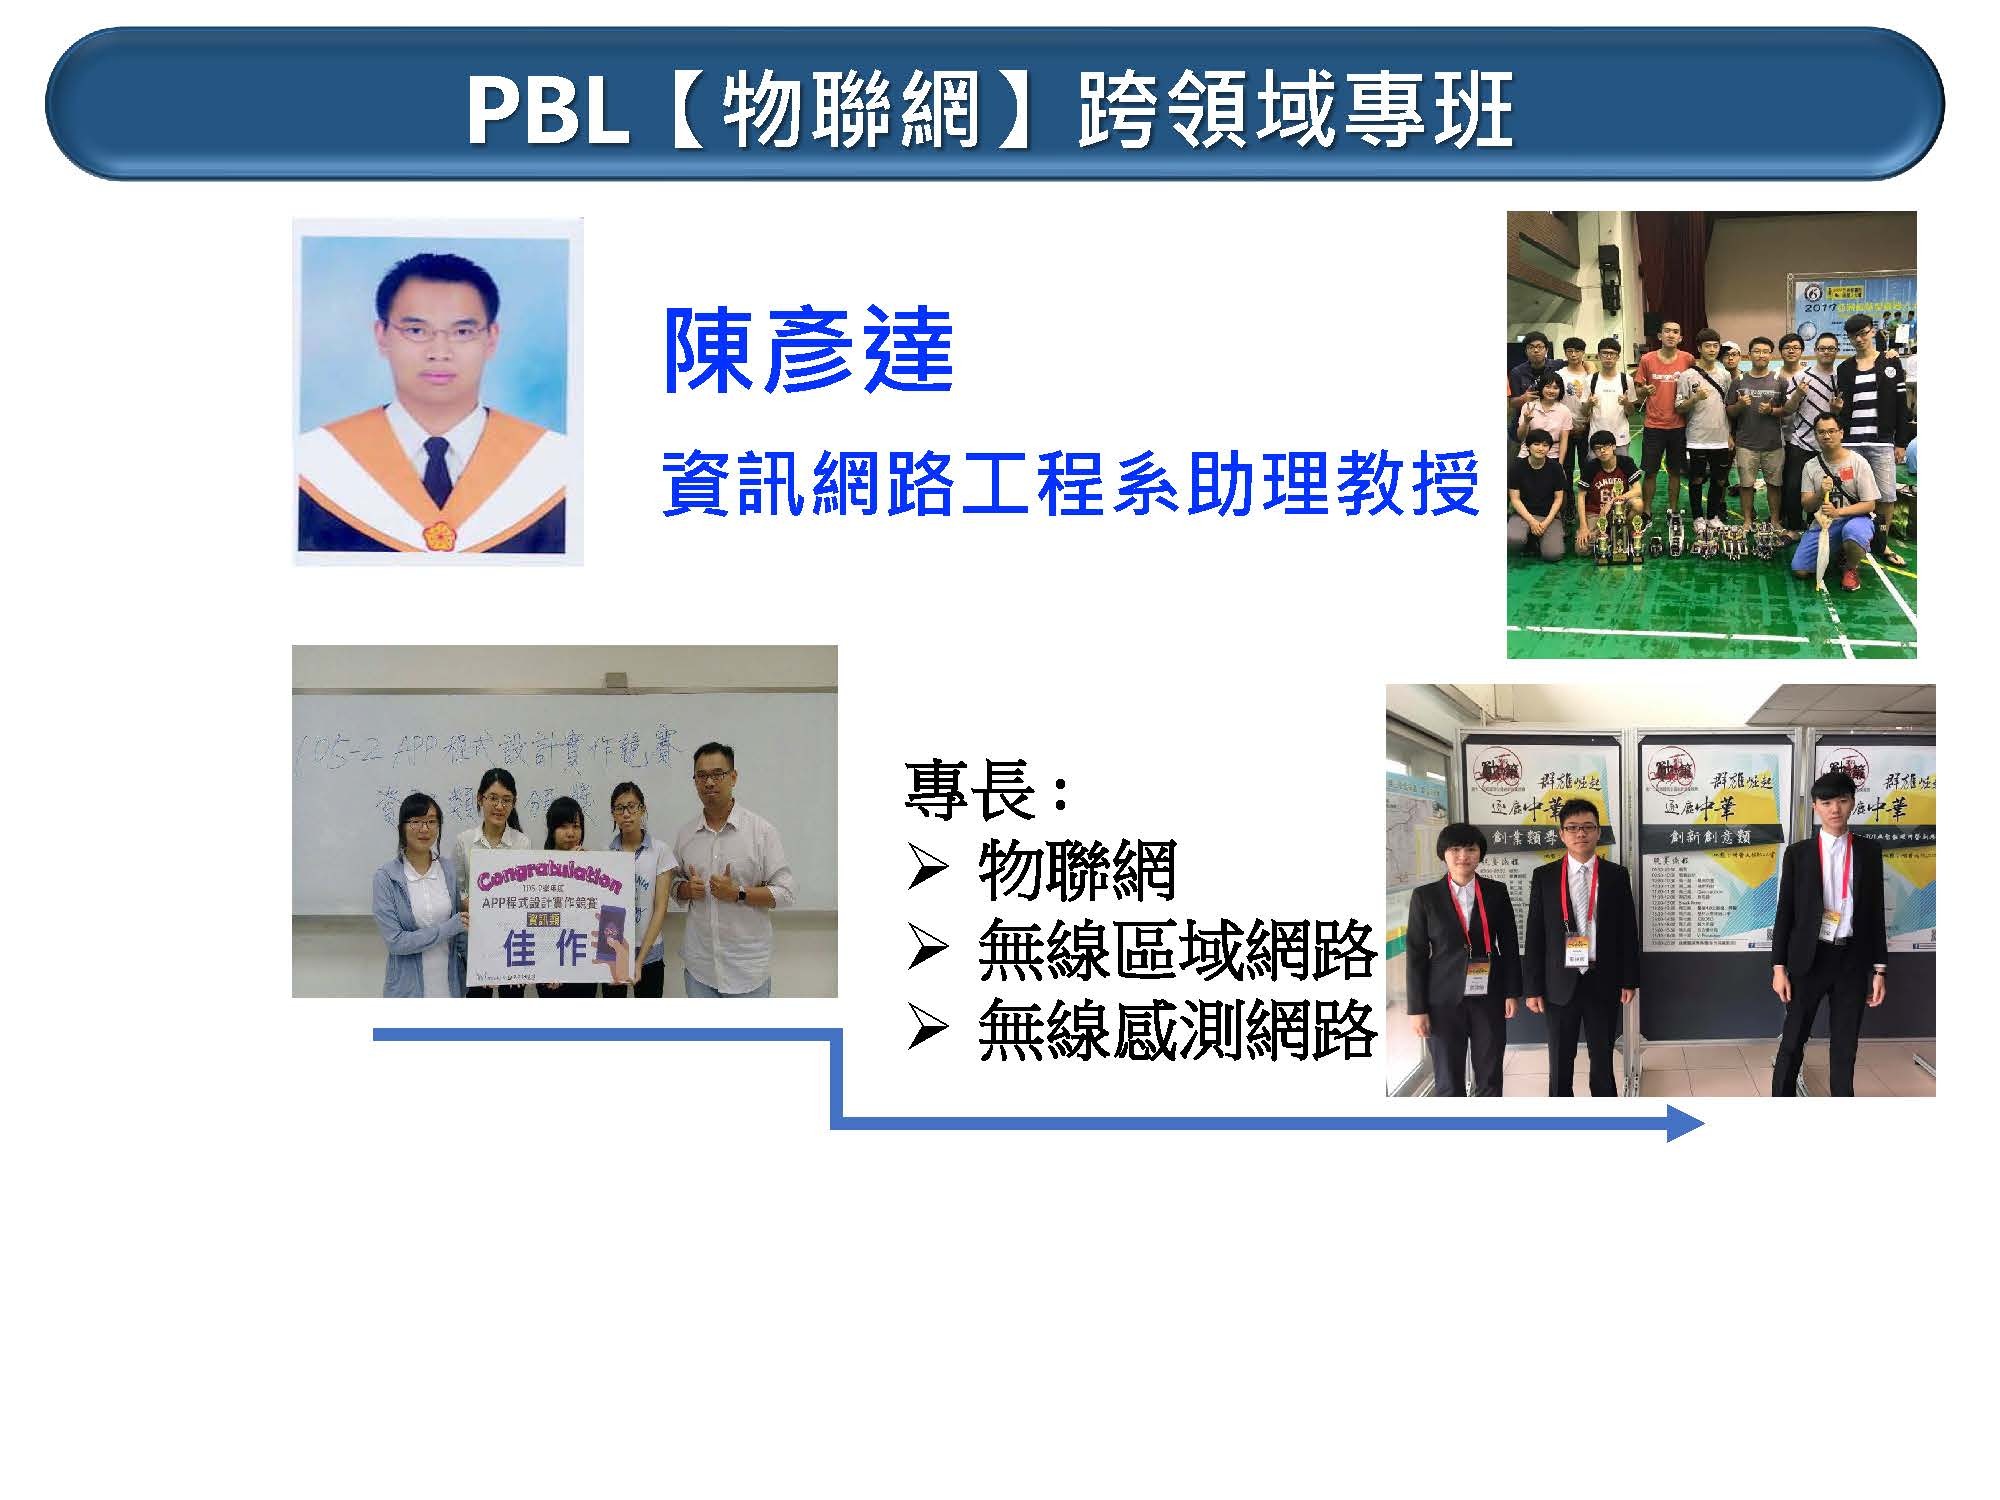 PBL(物聯網)跨領域專班指導老師陳彥達簡介示意圖